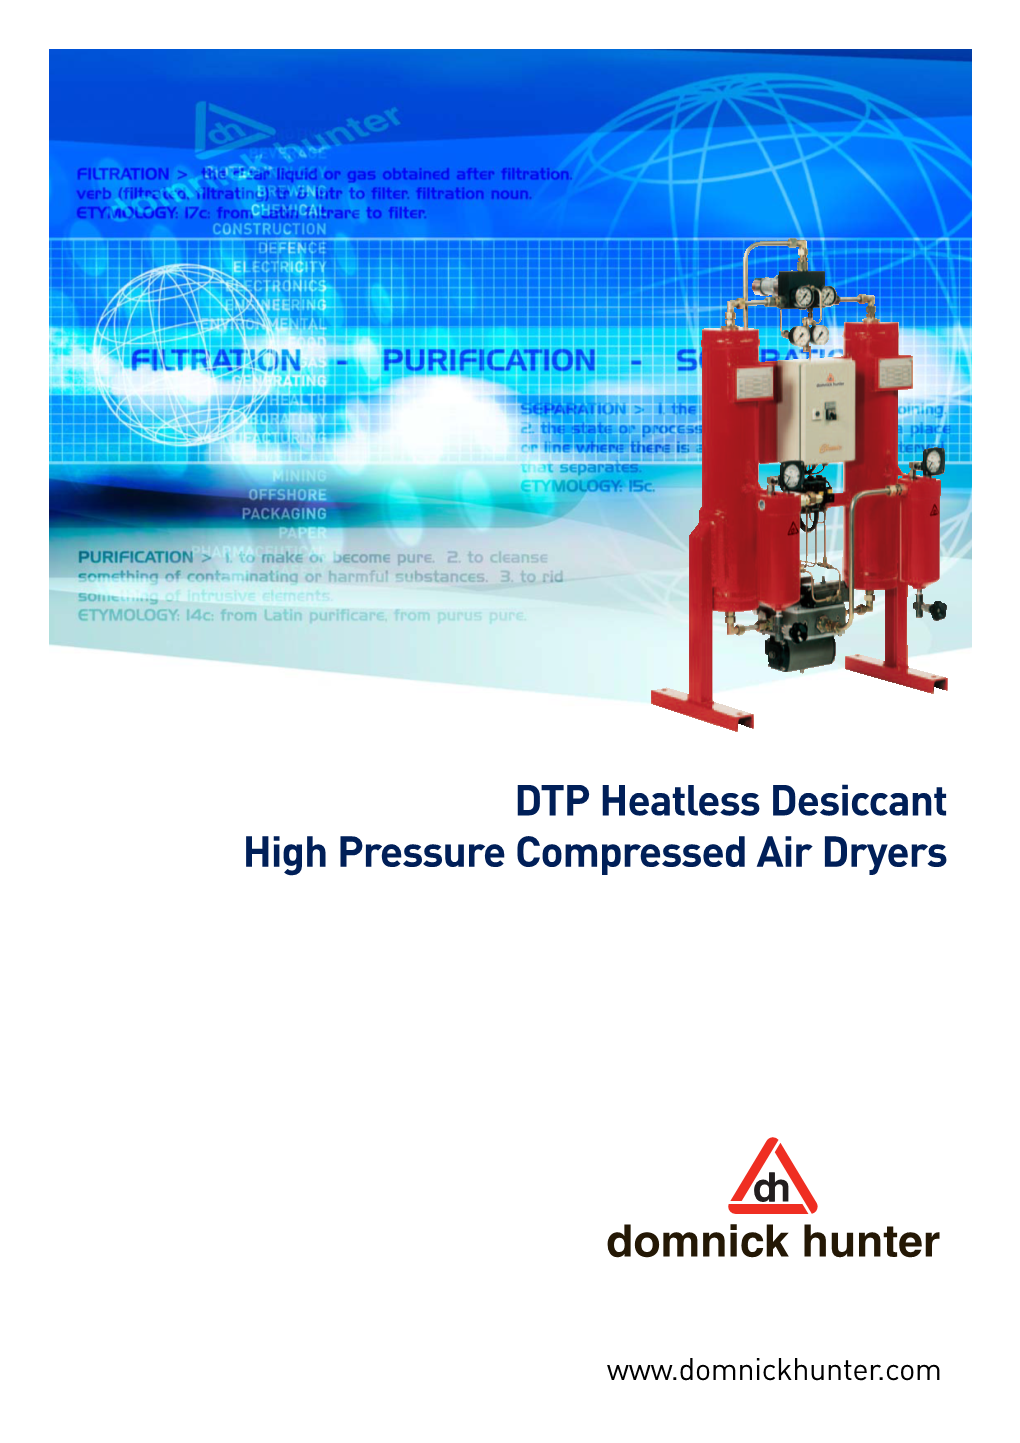 DTP Heatless Desiccant High Pressure Compressed Air Dryers